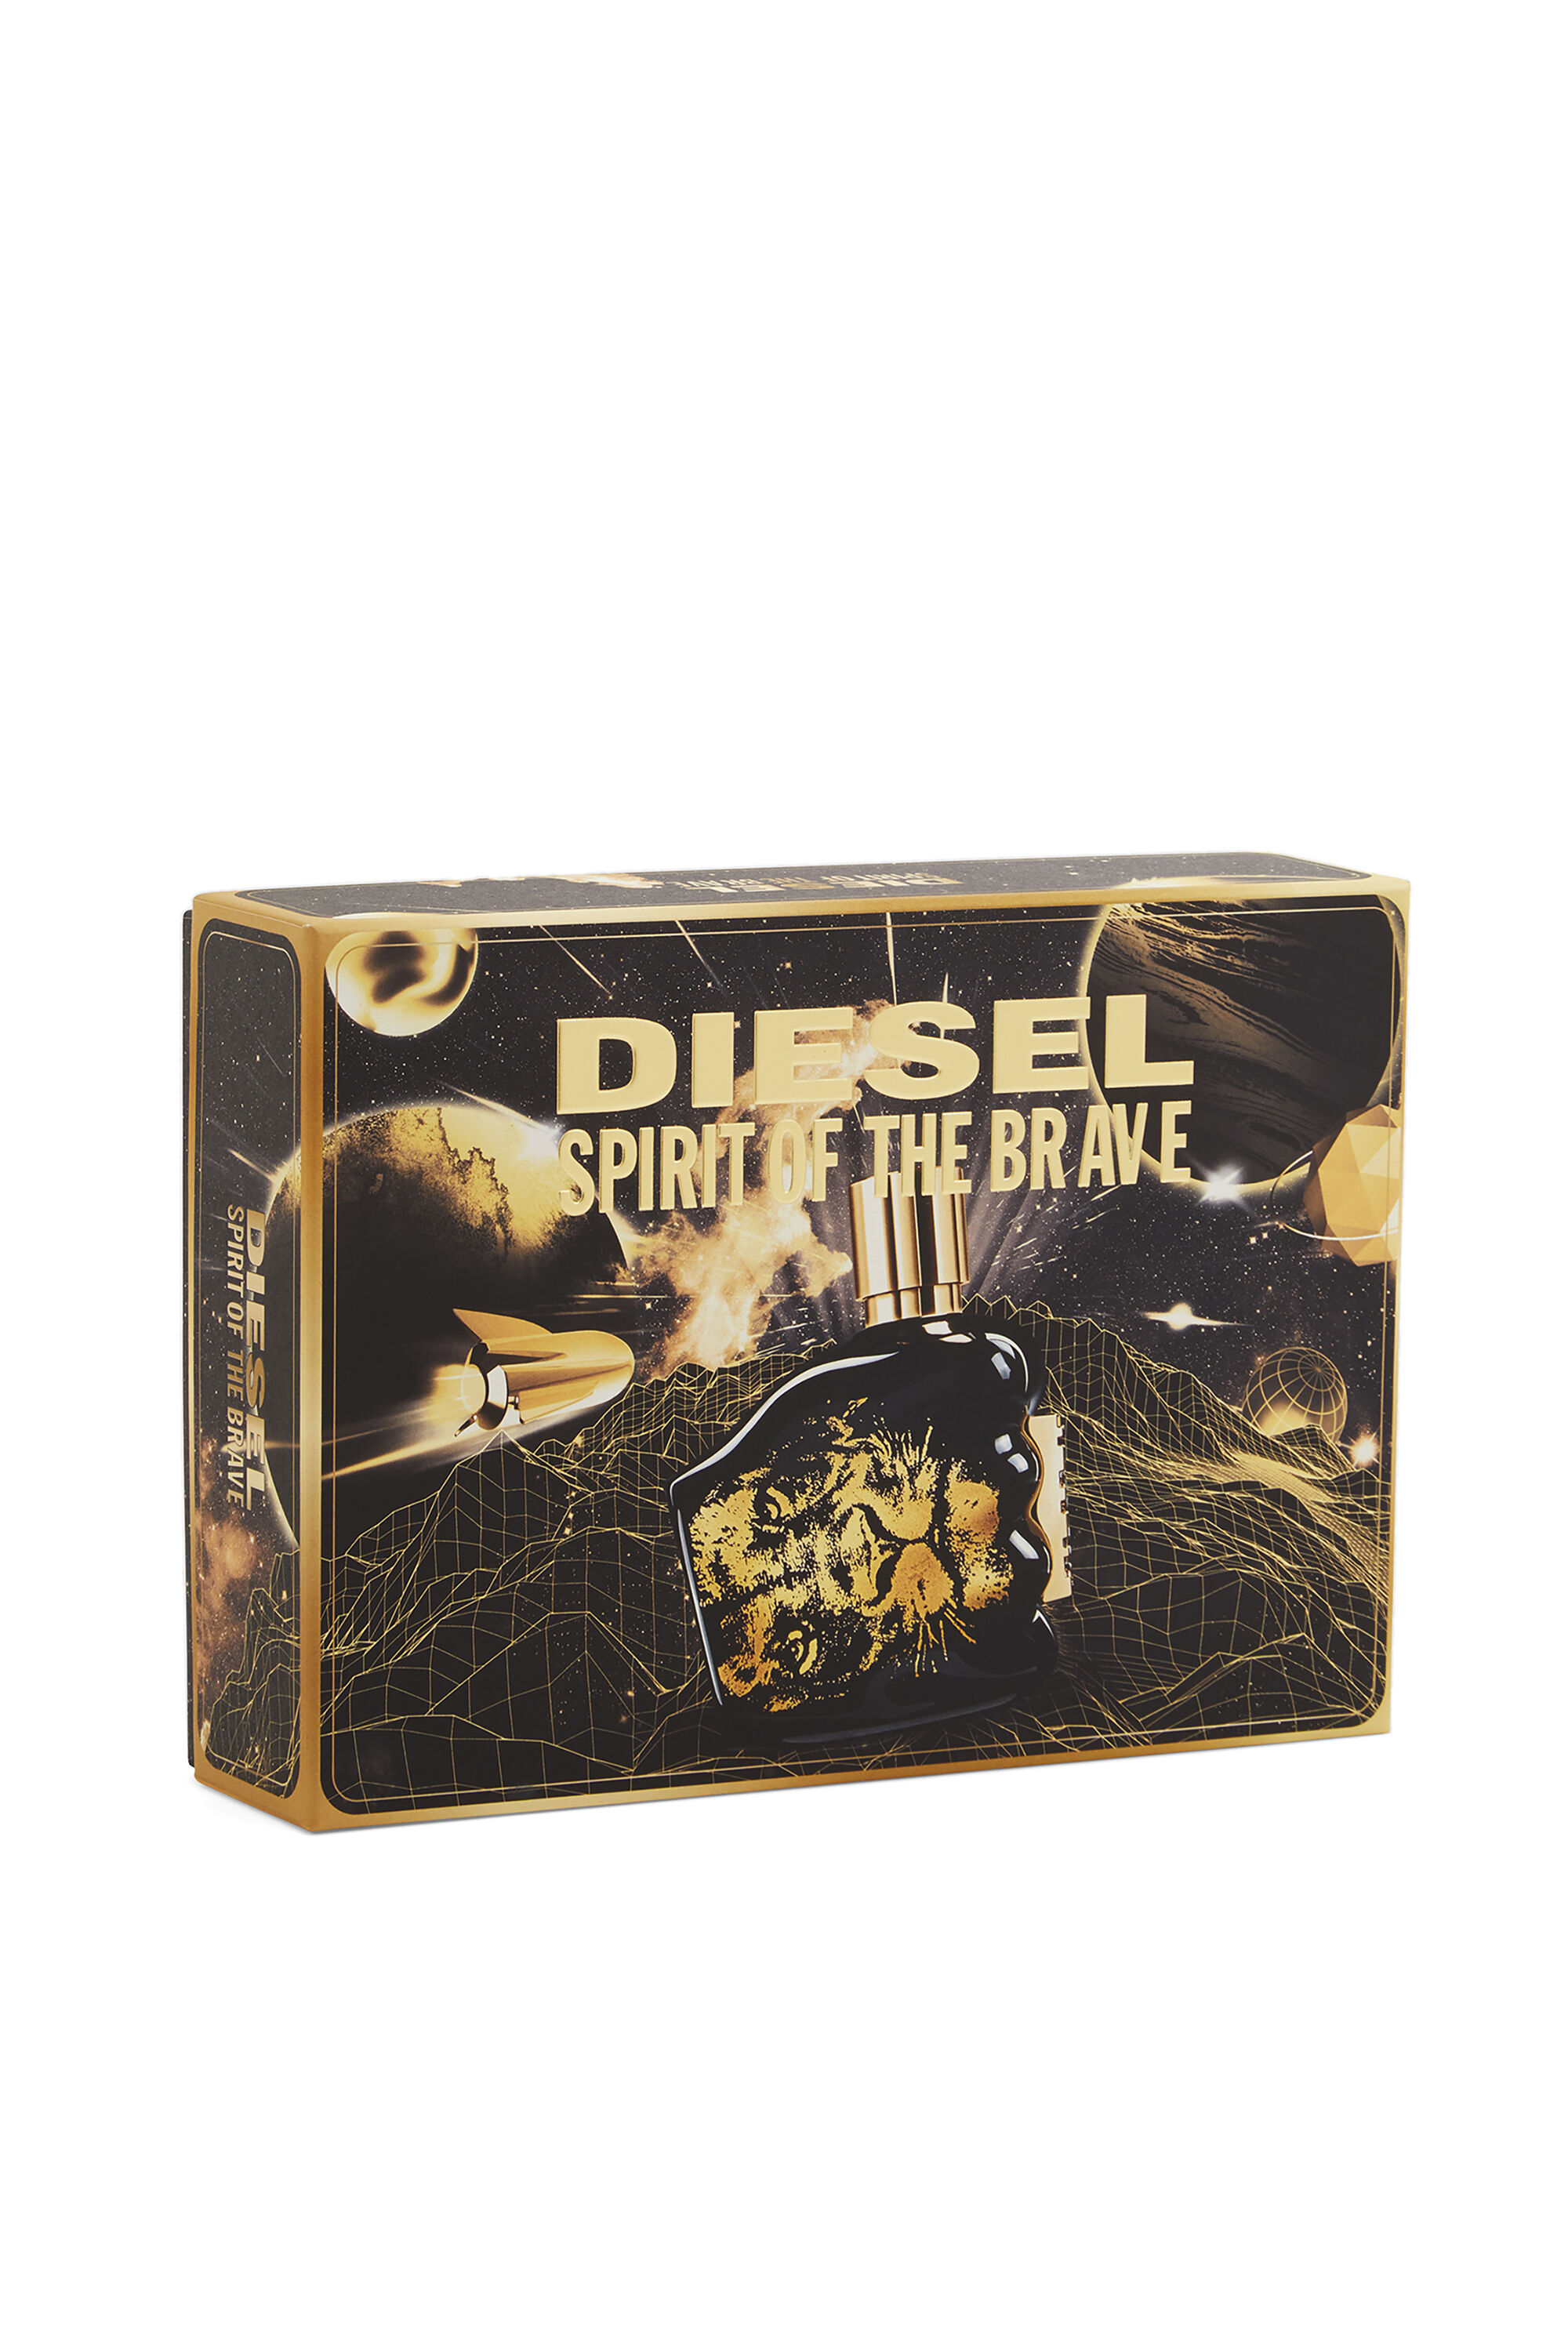 Diesel - SPIRIT OF THE BRAVE 50ML GIFT SET, Black/Gold - Image 3